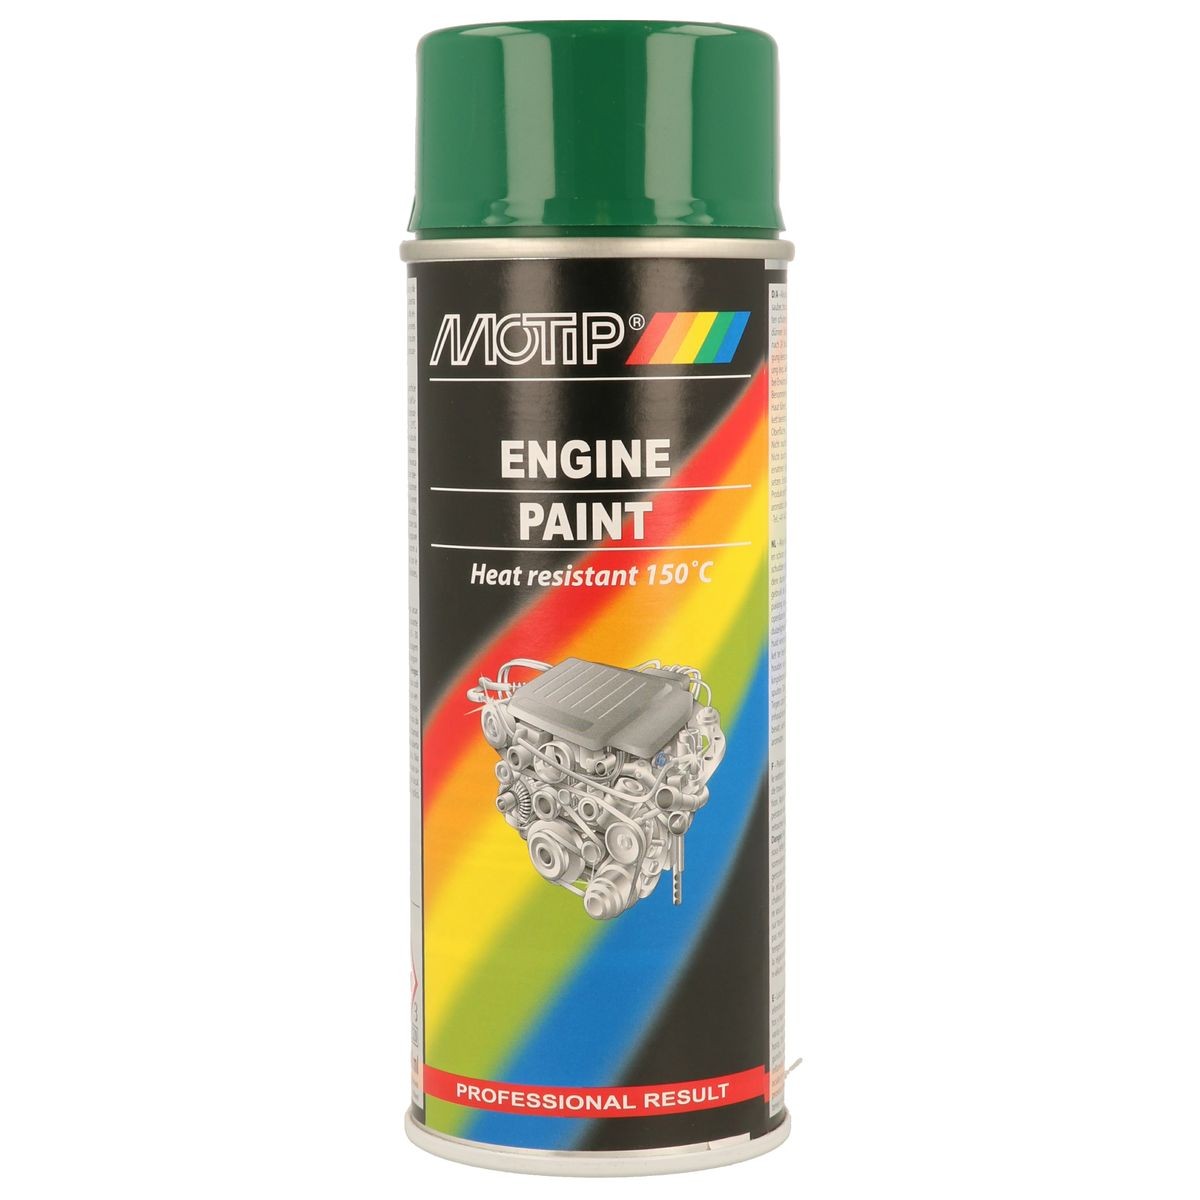 MOTIP 04095 High temperature engine paint Kompakt blue glossy 400 ml, green, Capacity: 400ml